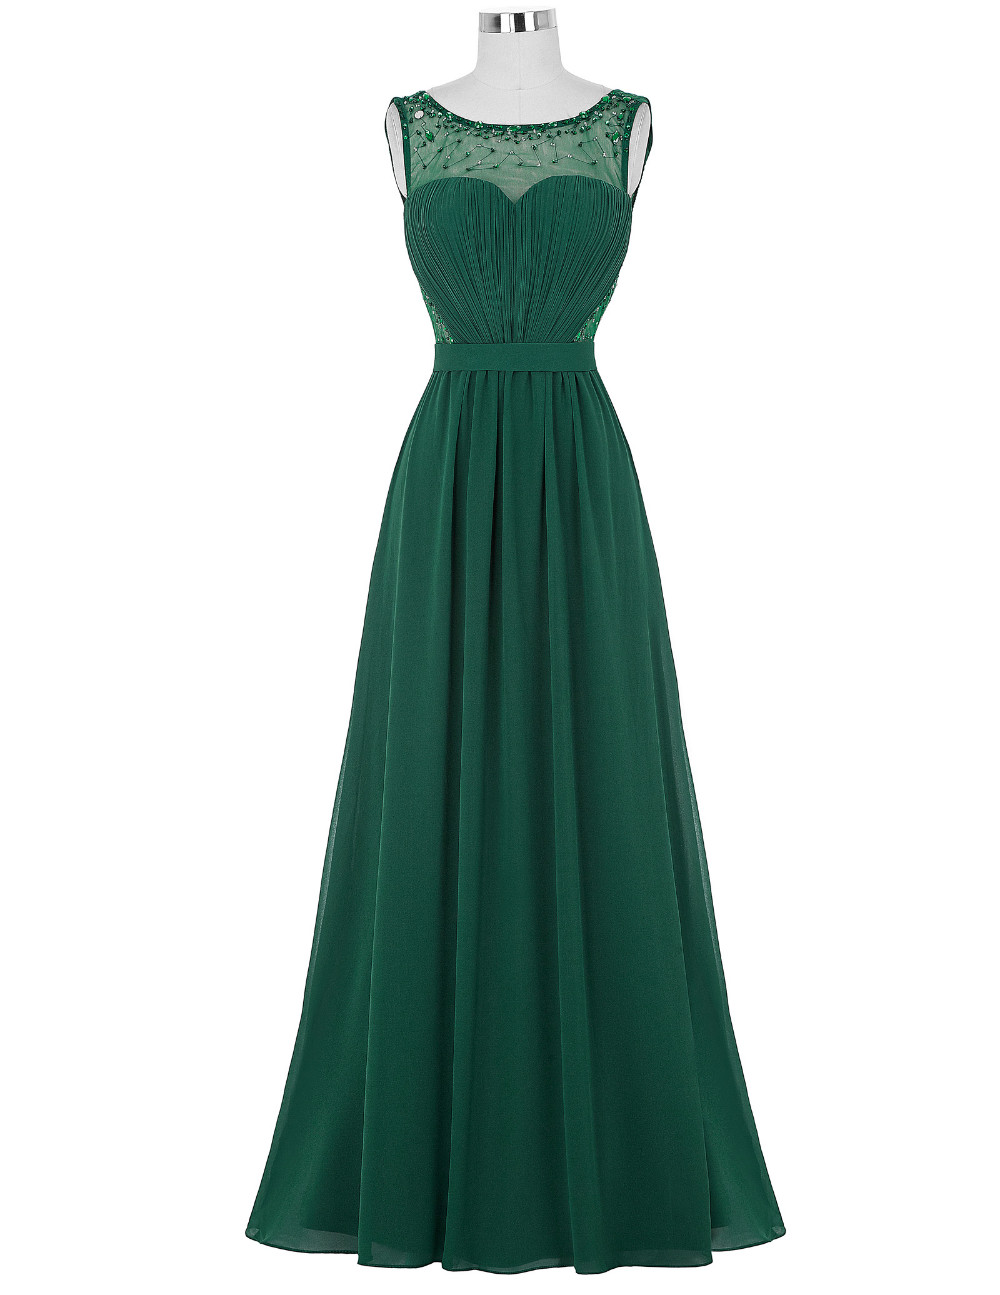 Lace Prom Dresses Long Royal Blue Green Black White Evening Dress With Stones Vestido De Festa Chiffon Prom Dresses